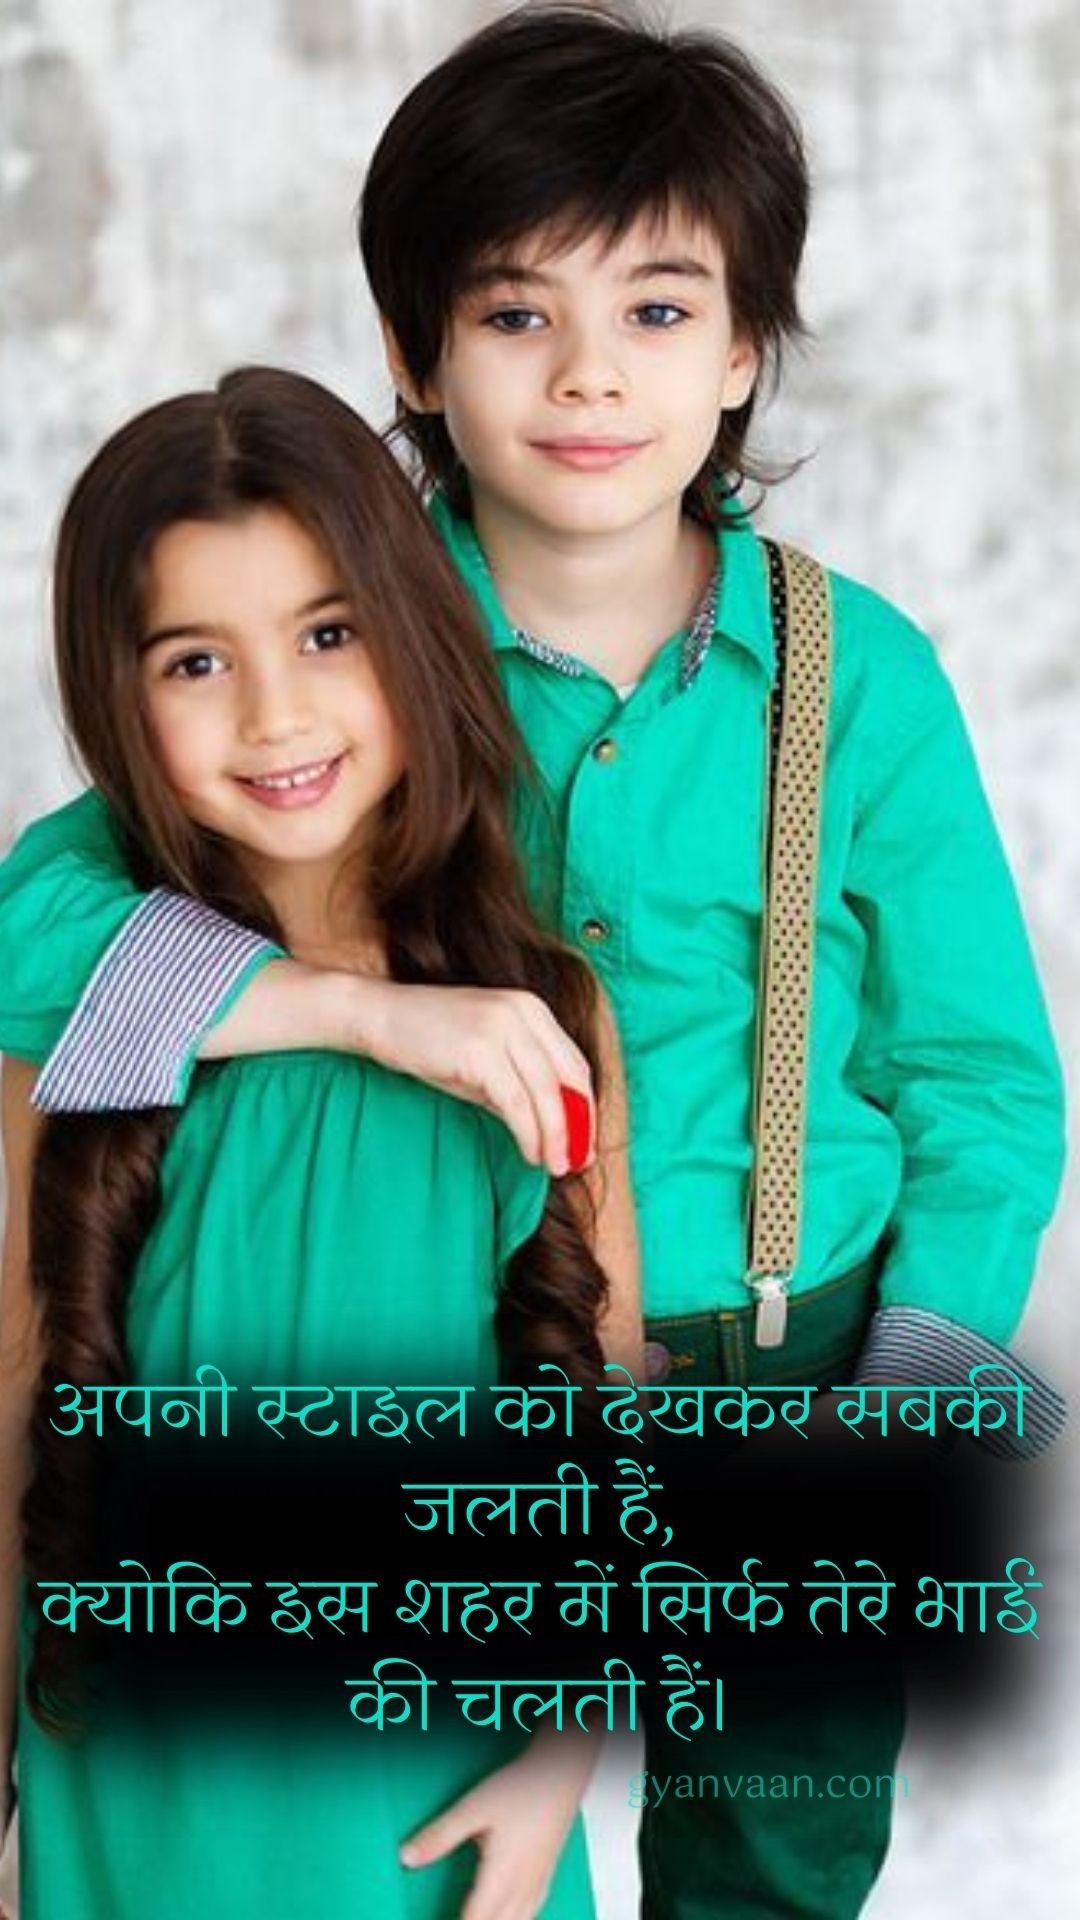 Brother And Sister Shayari Quotes And Status With Captions For Mobile 33 - Brother And Sister Quotes